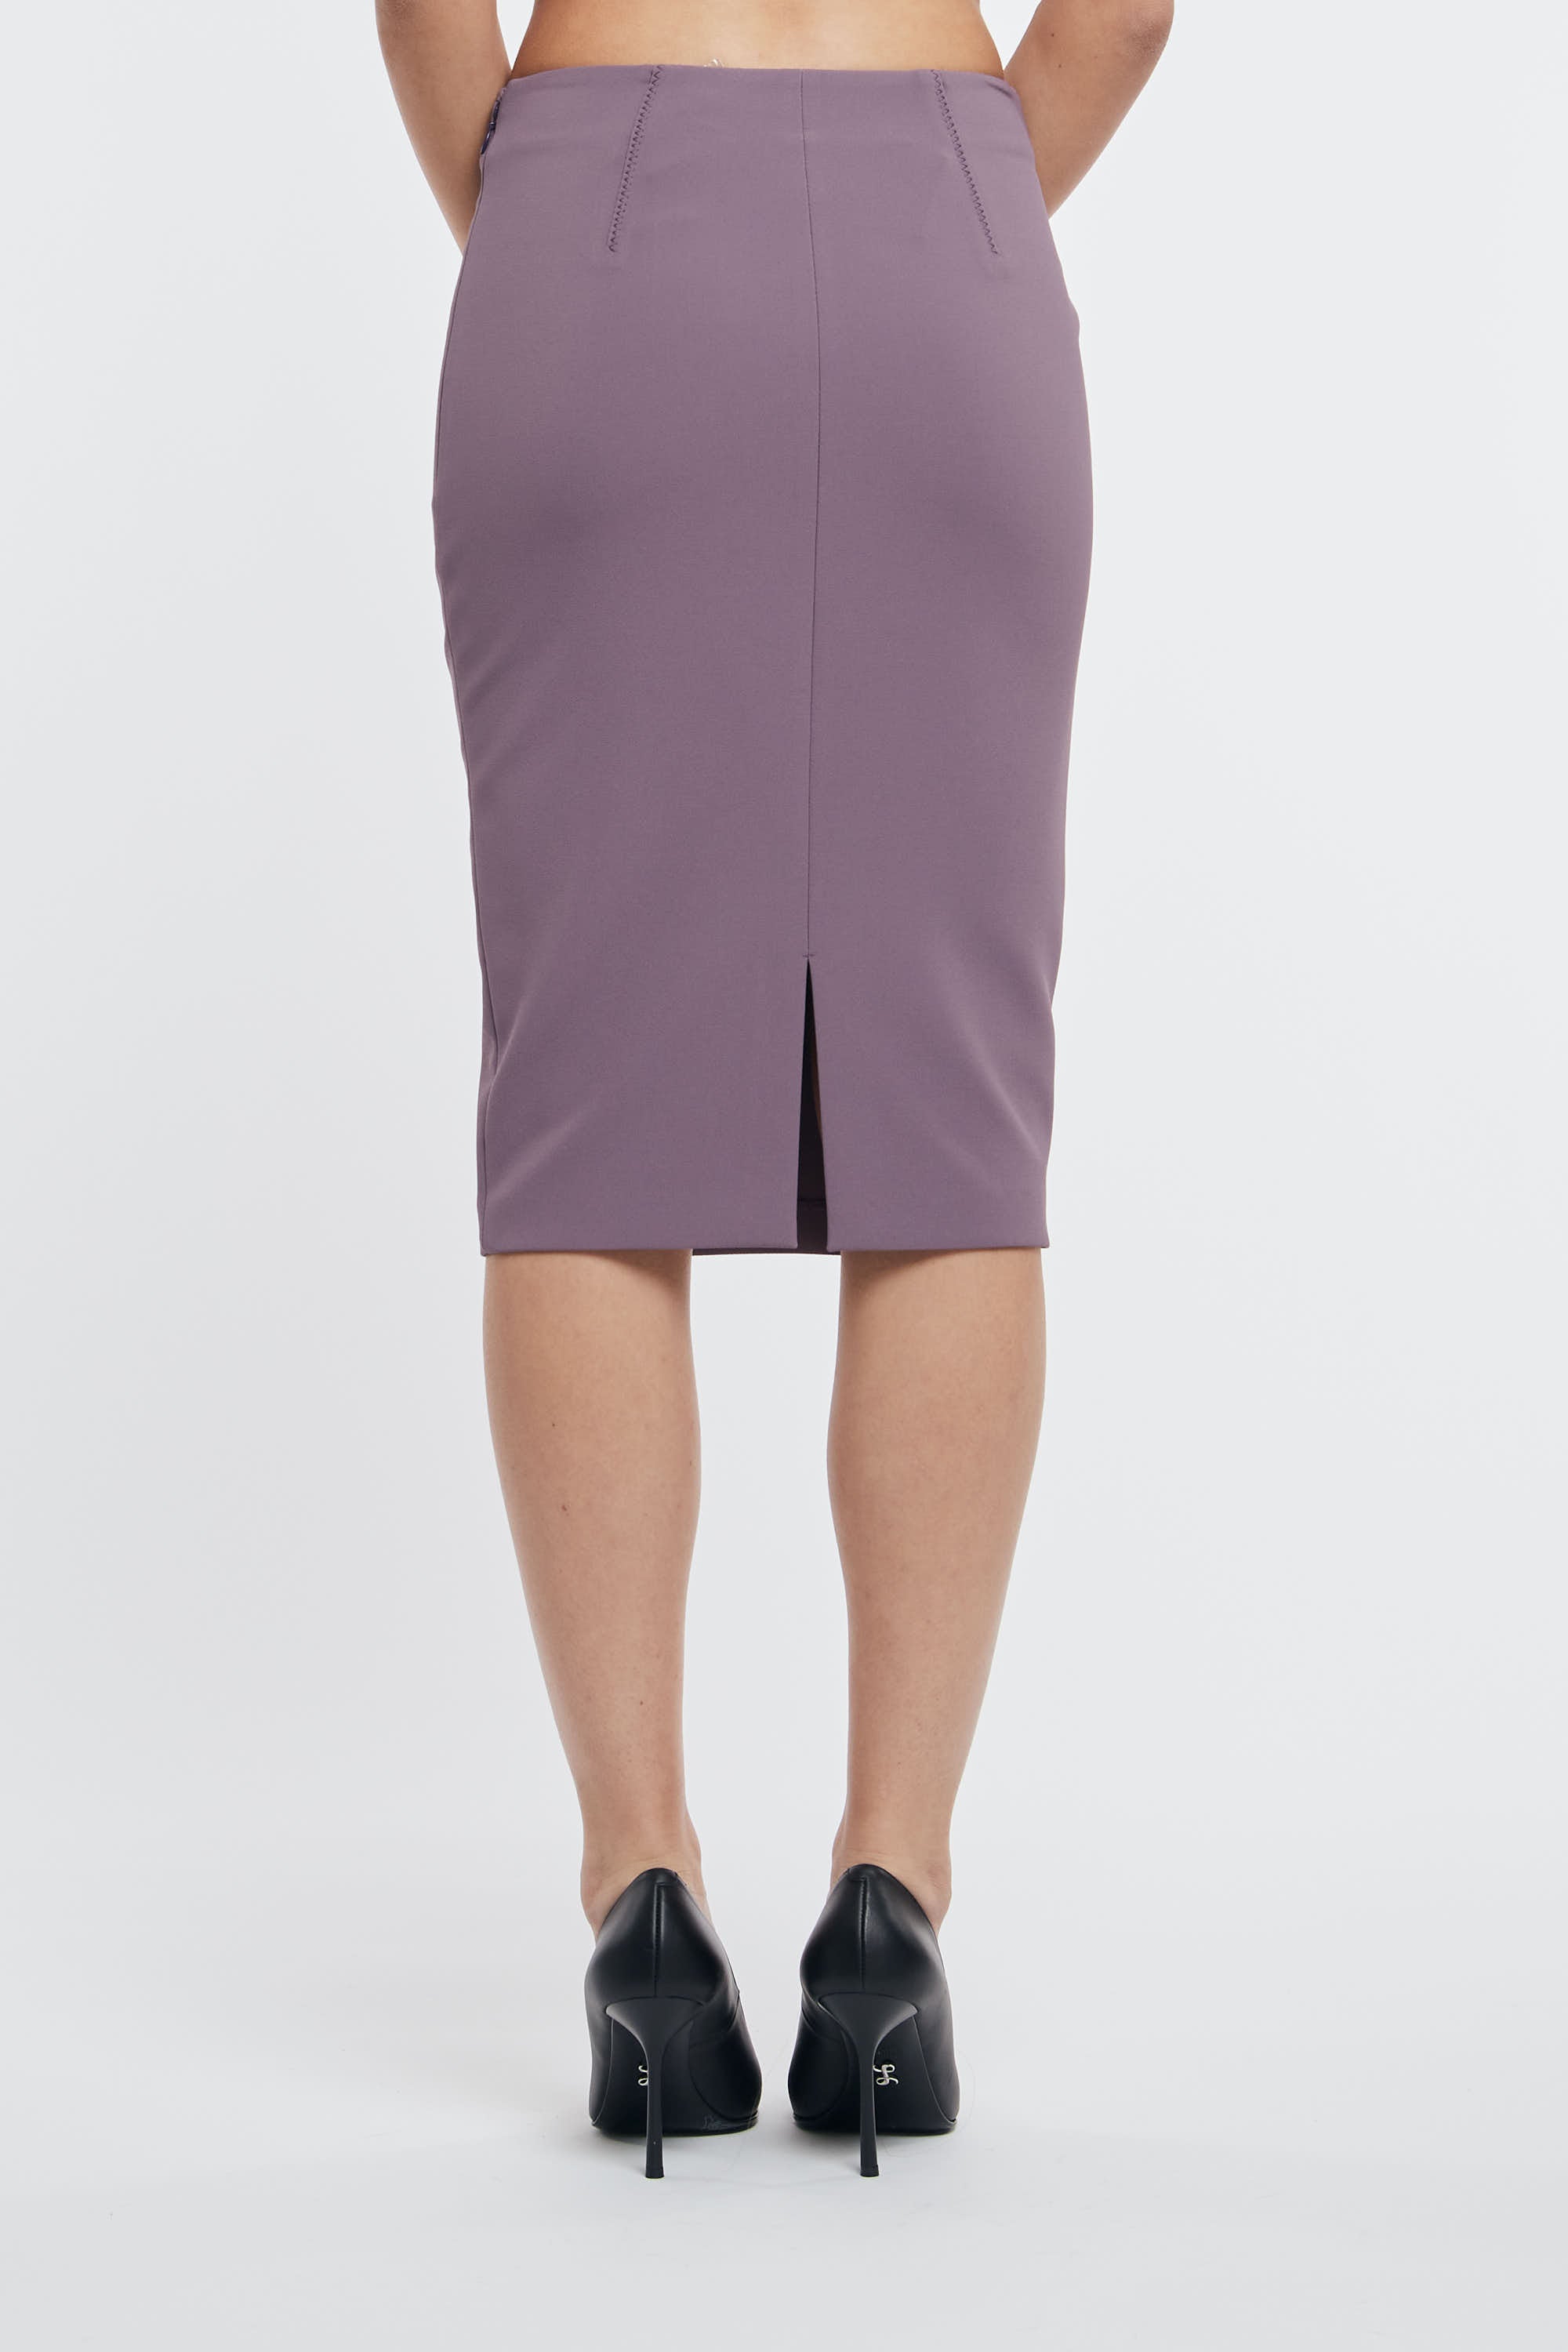 File:Purple Cardigan, Black Pencil Skirt, Checkered Top, and Silver Heels  (17632734246).jpg - Wikipedia